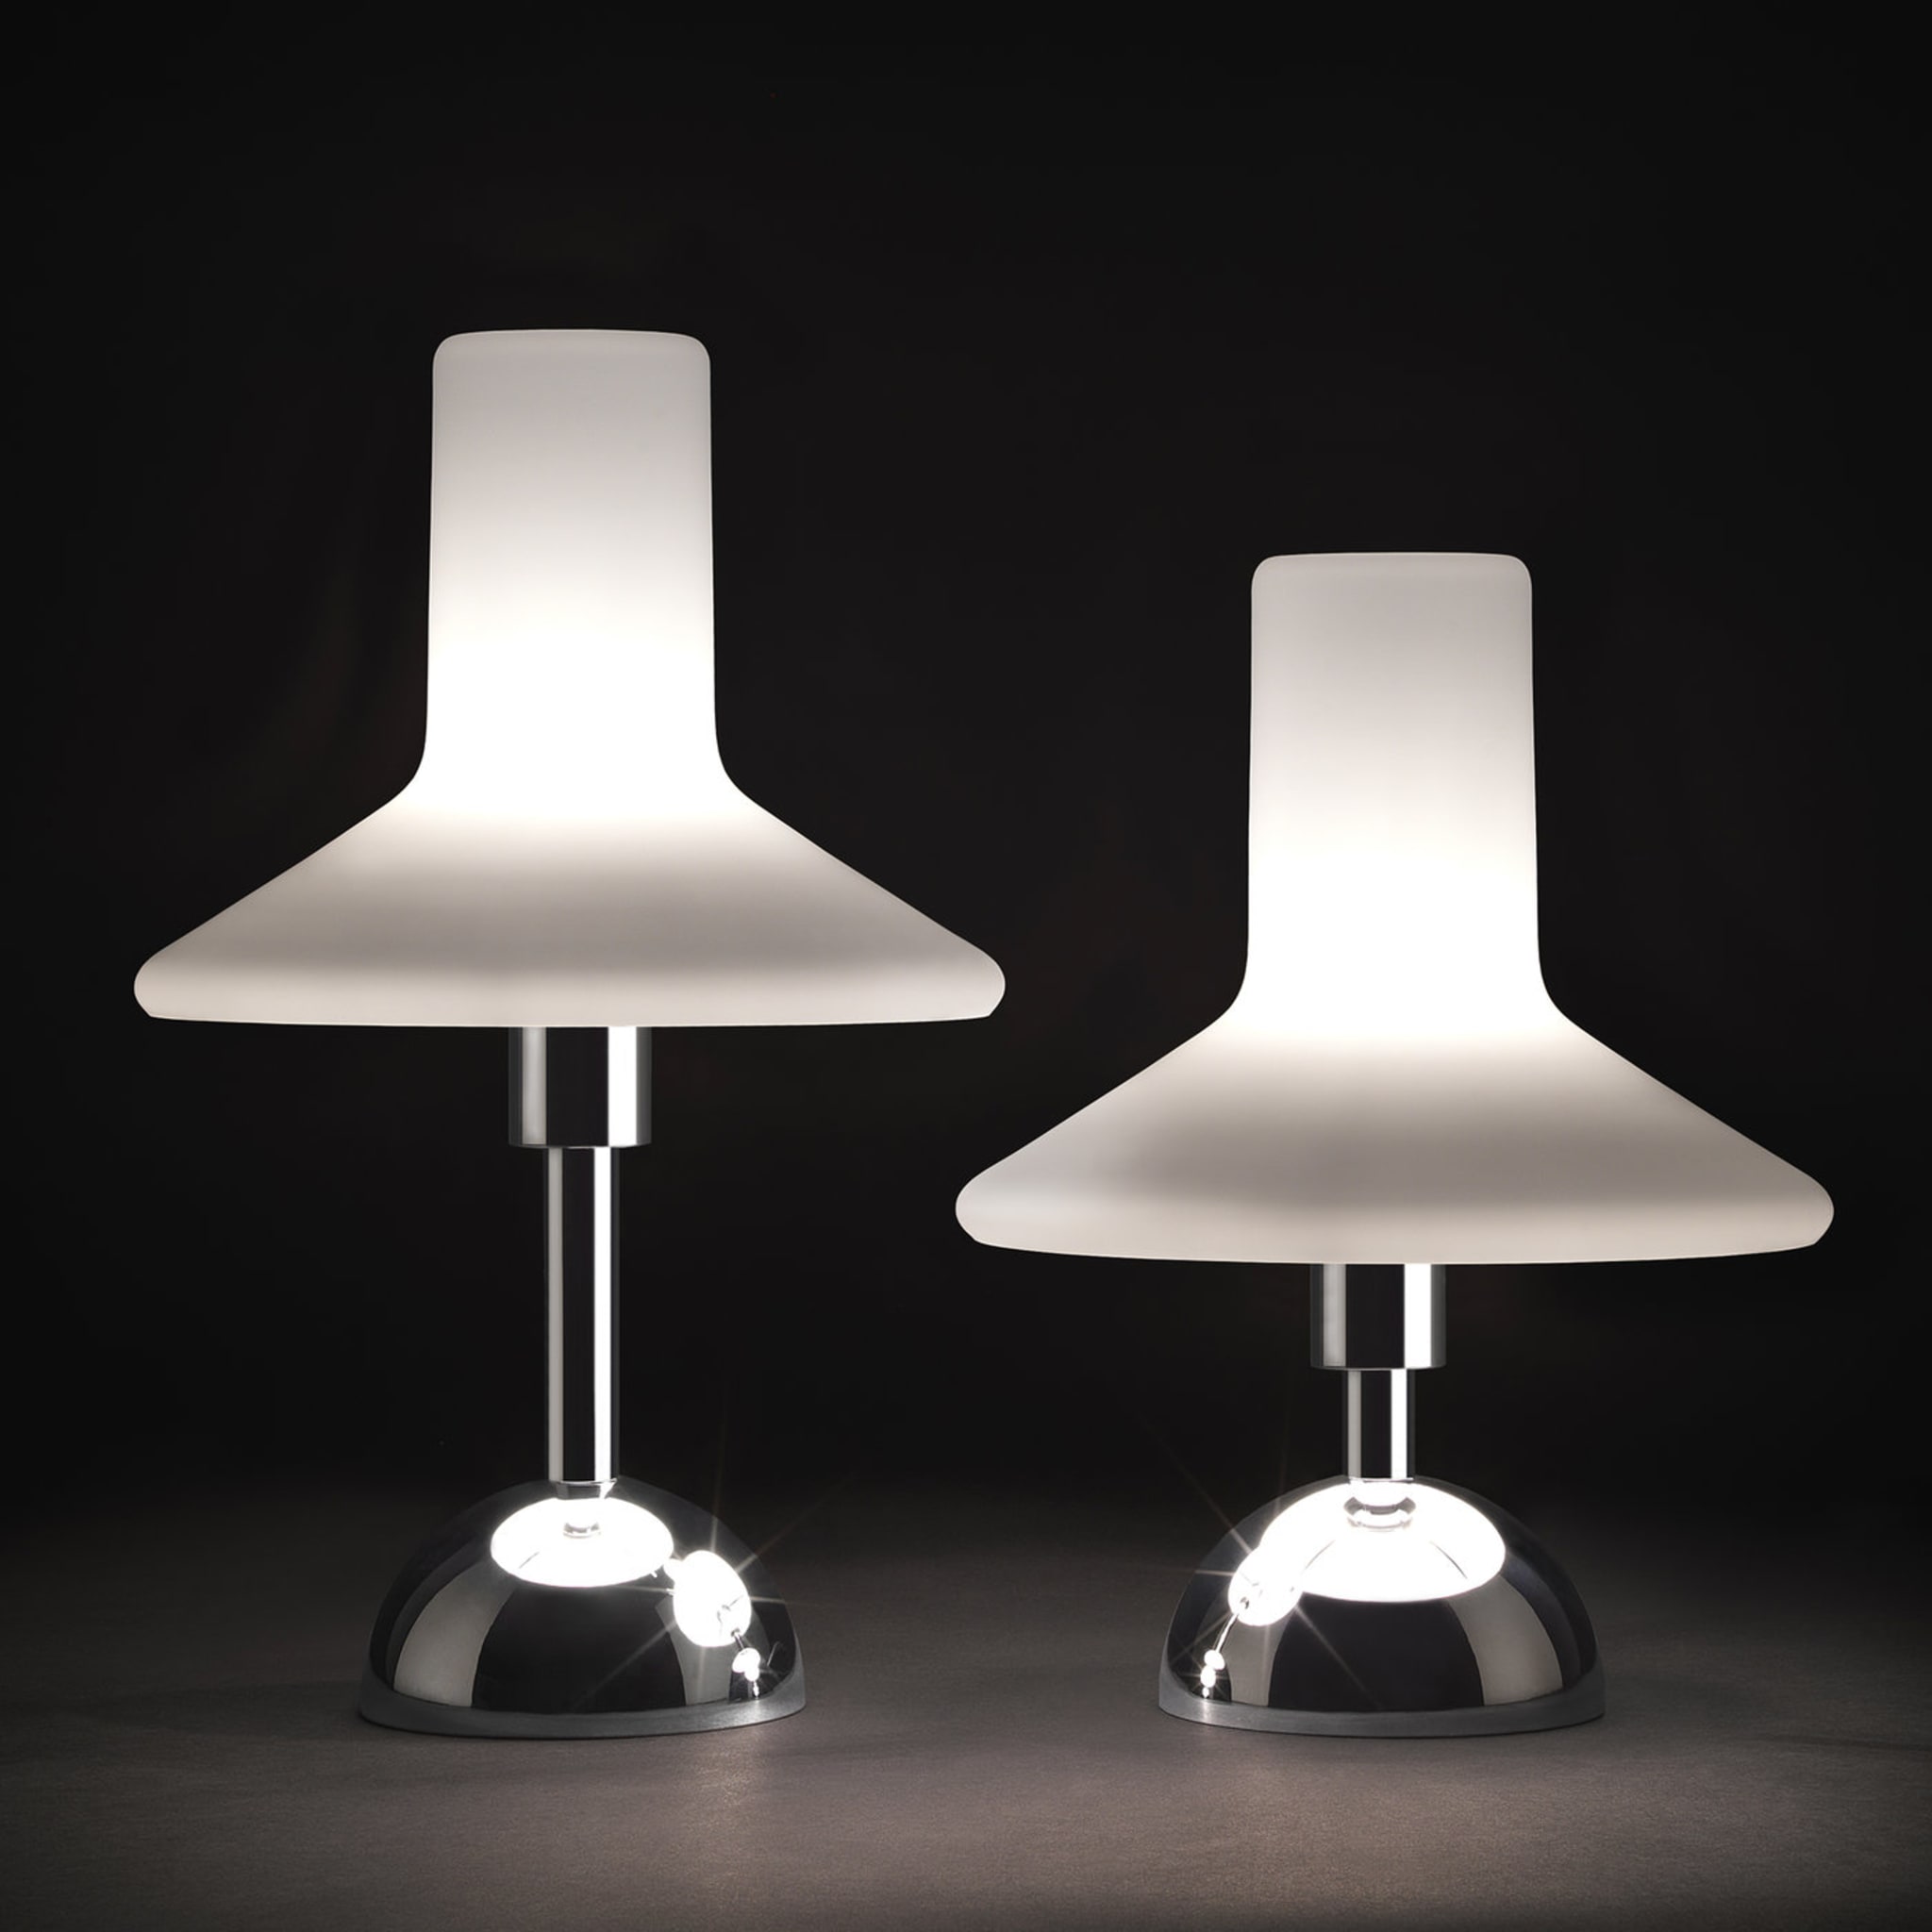 Olly Medium Table Lamp - Alternative view 4